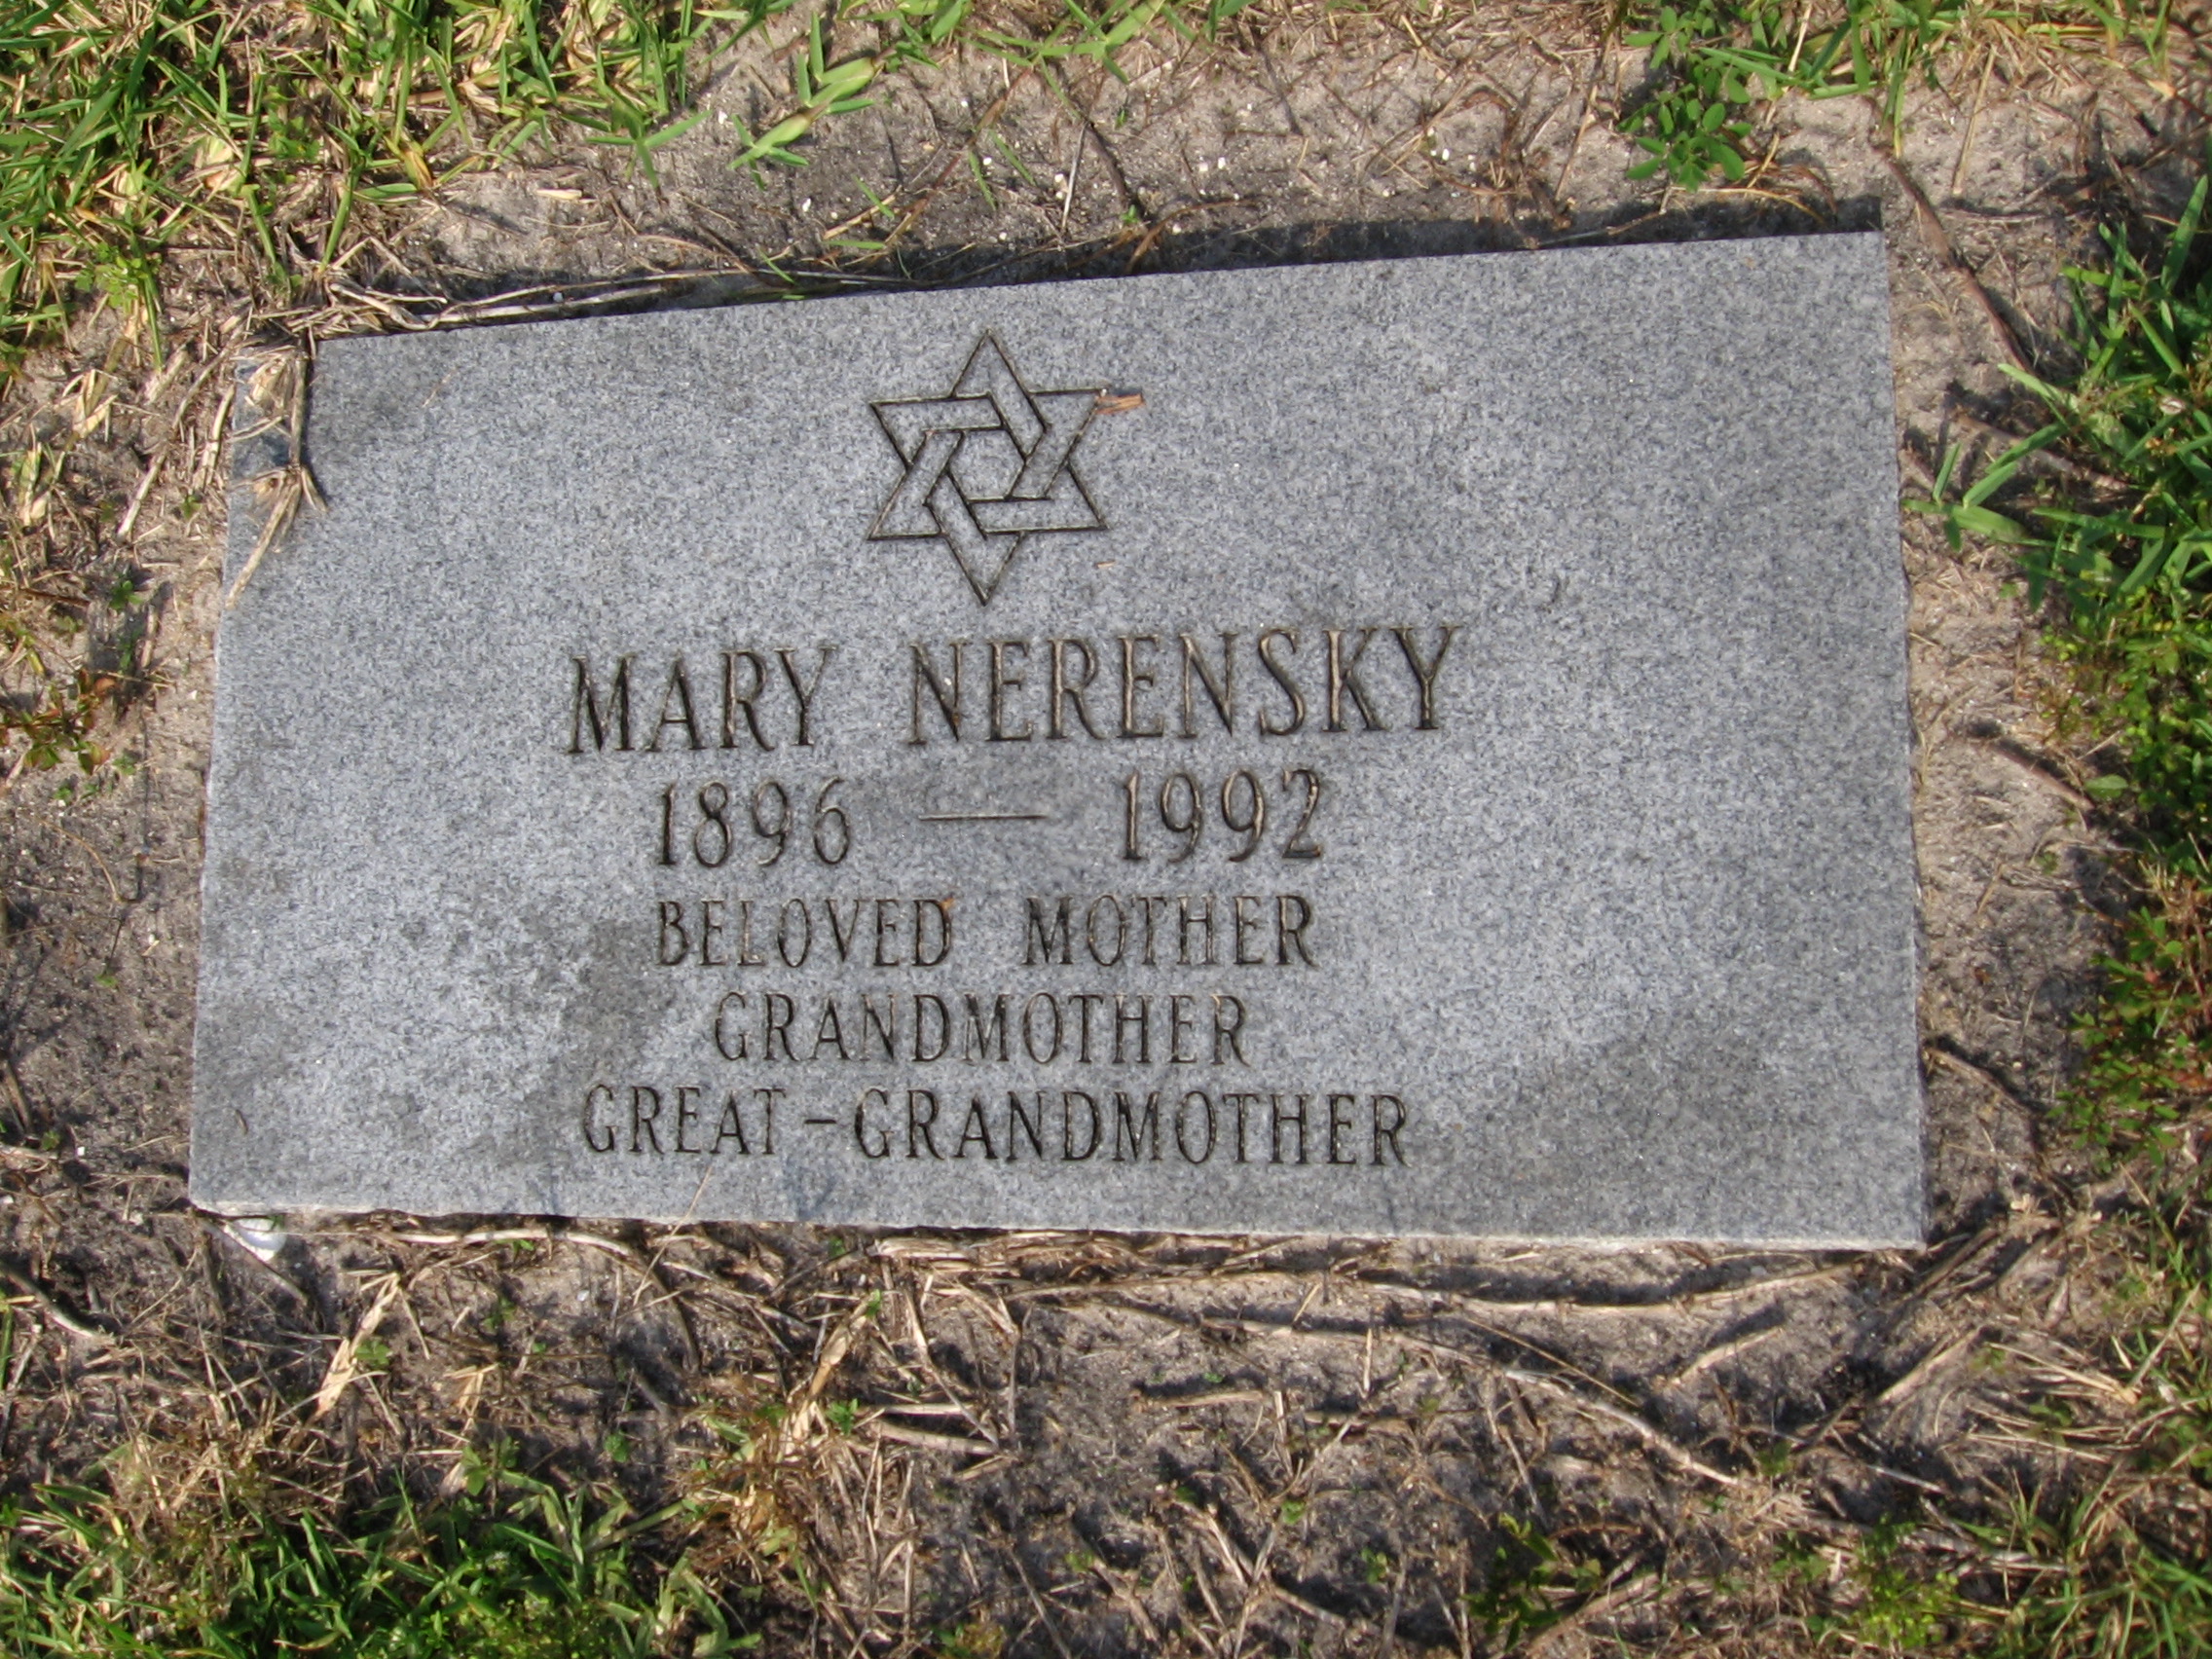 Mary Nerensky